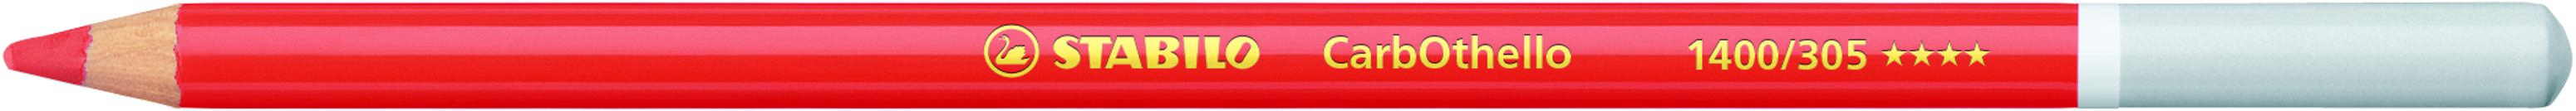 CARBOTHELLO PASTEL PENCILS - VERMILLION RED 1400/305